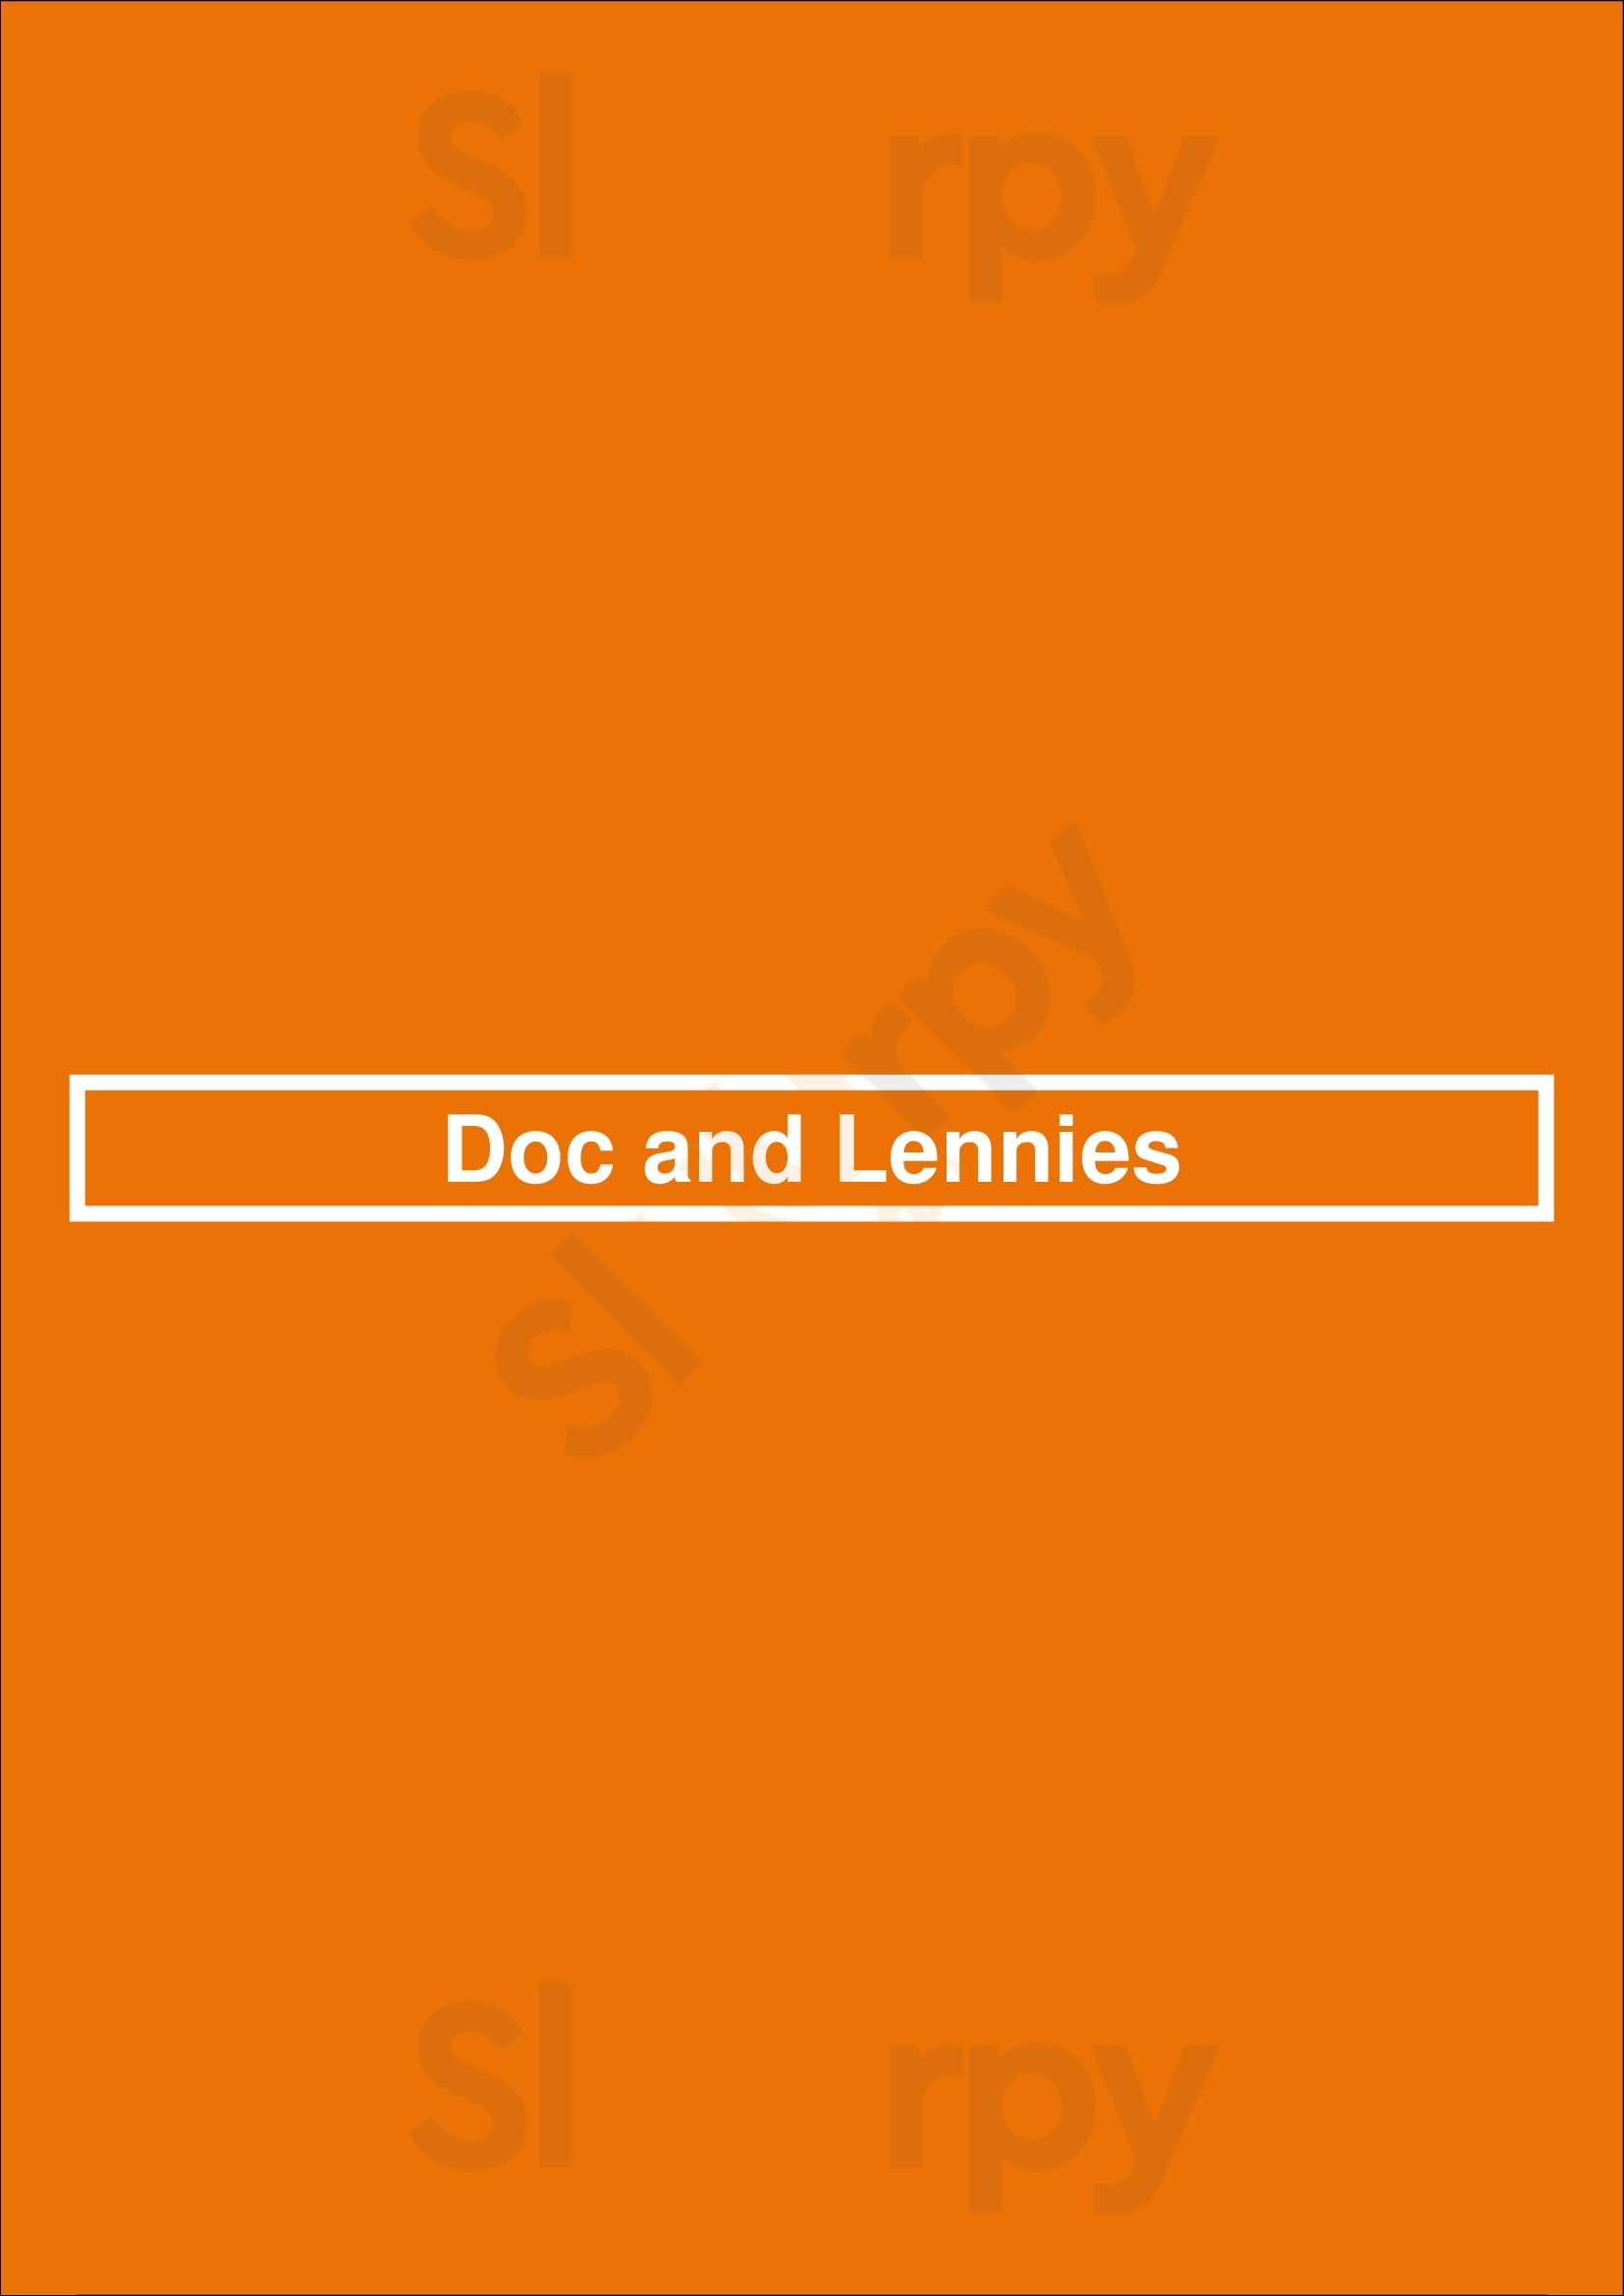 Doc And Lennies Cleveland Menu - 1